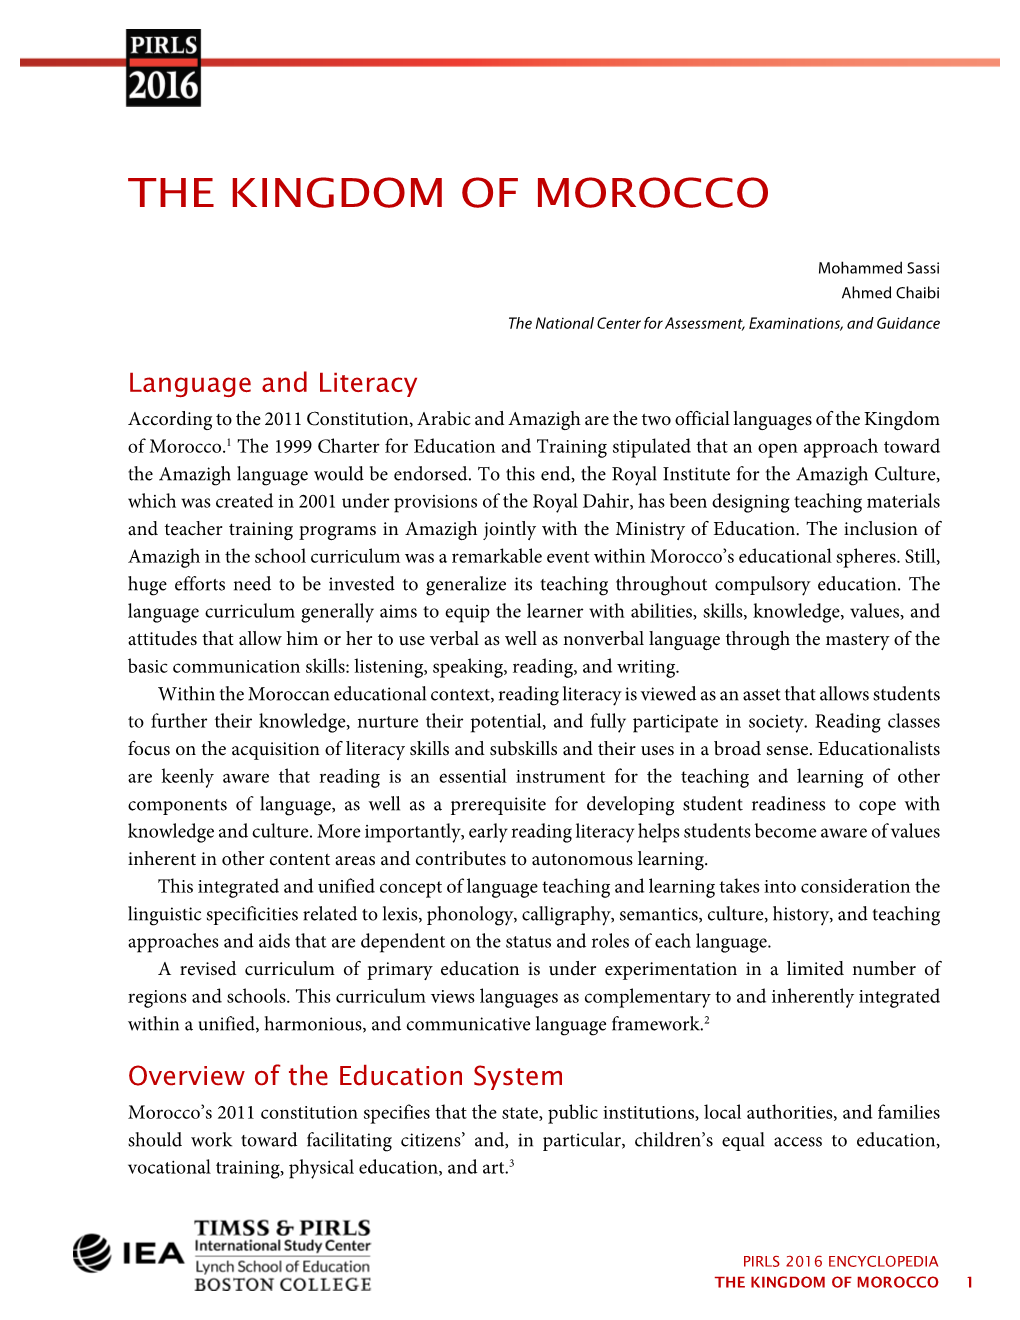 The Kingdom of Morocco